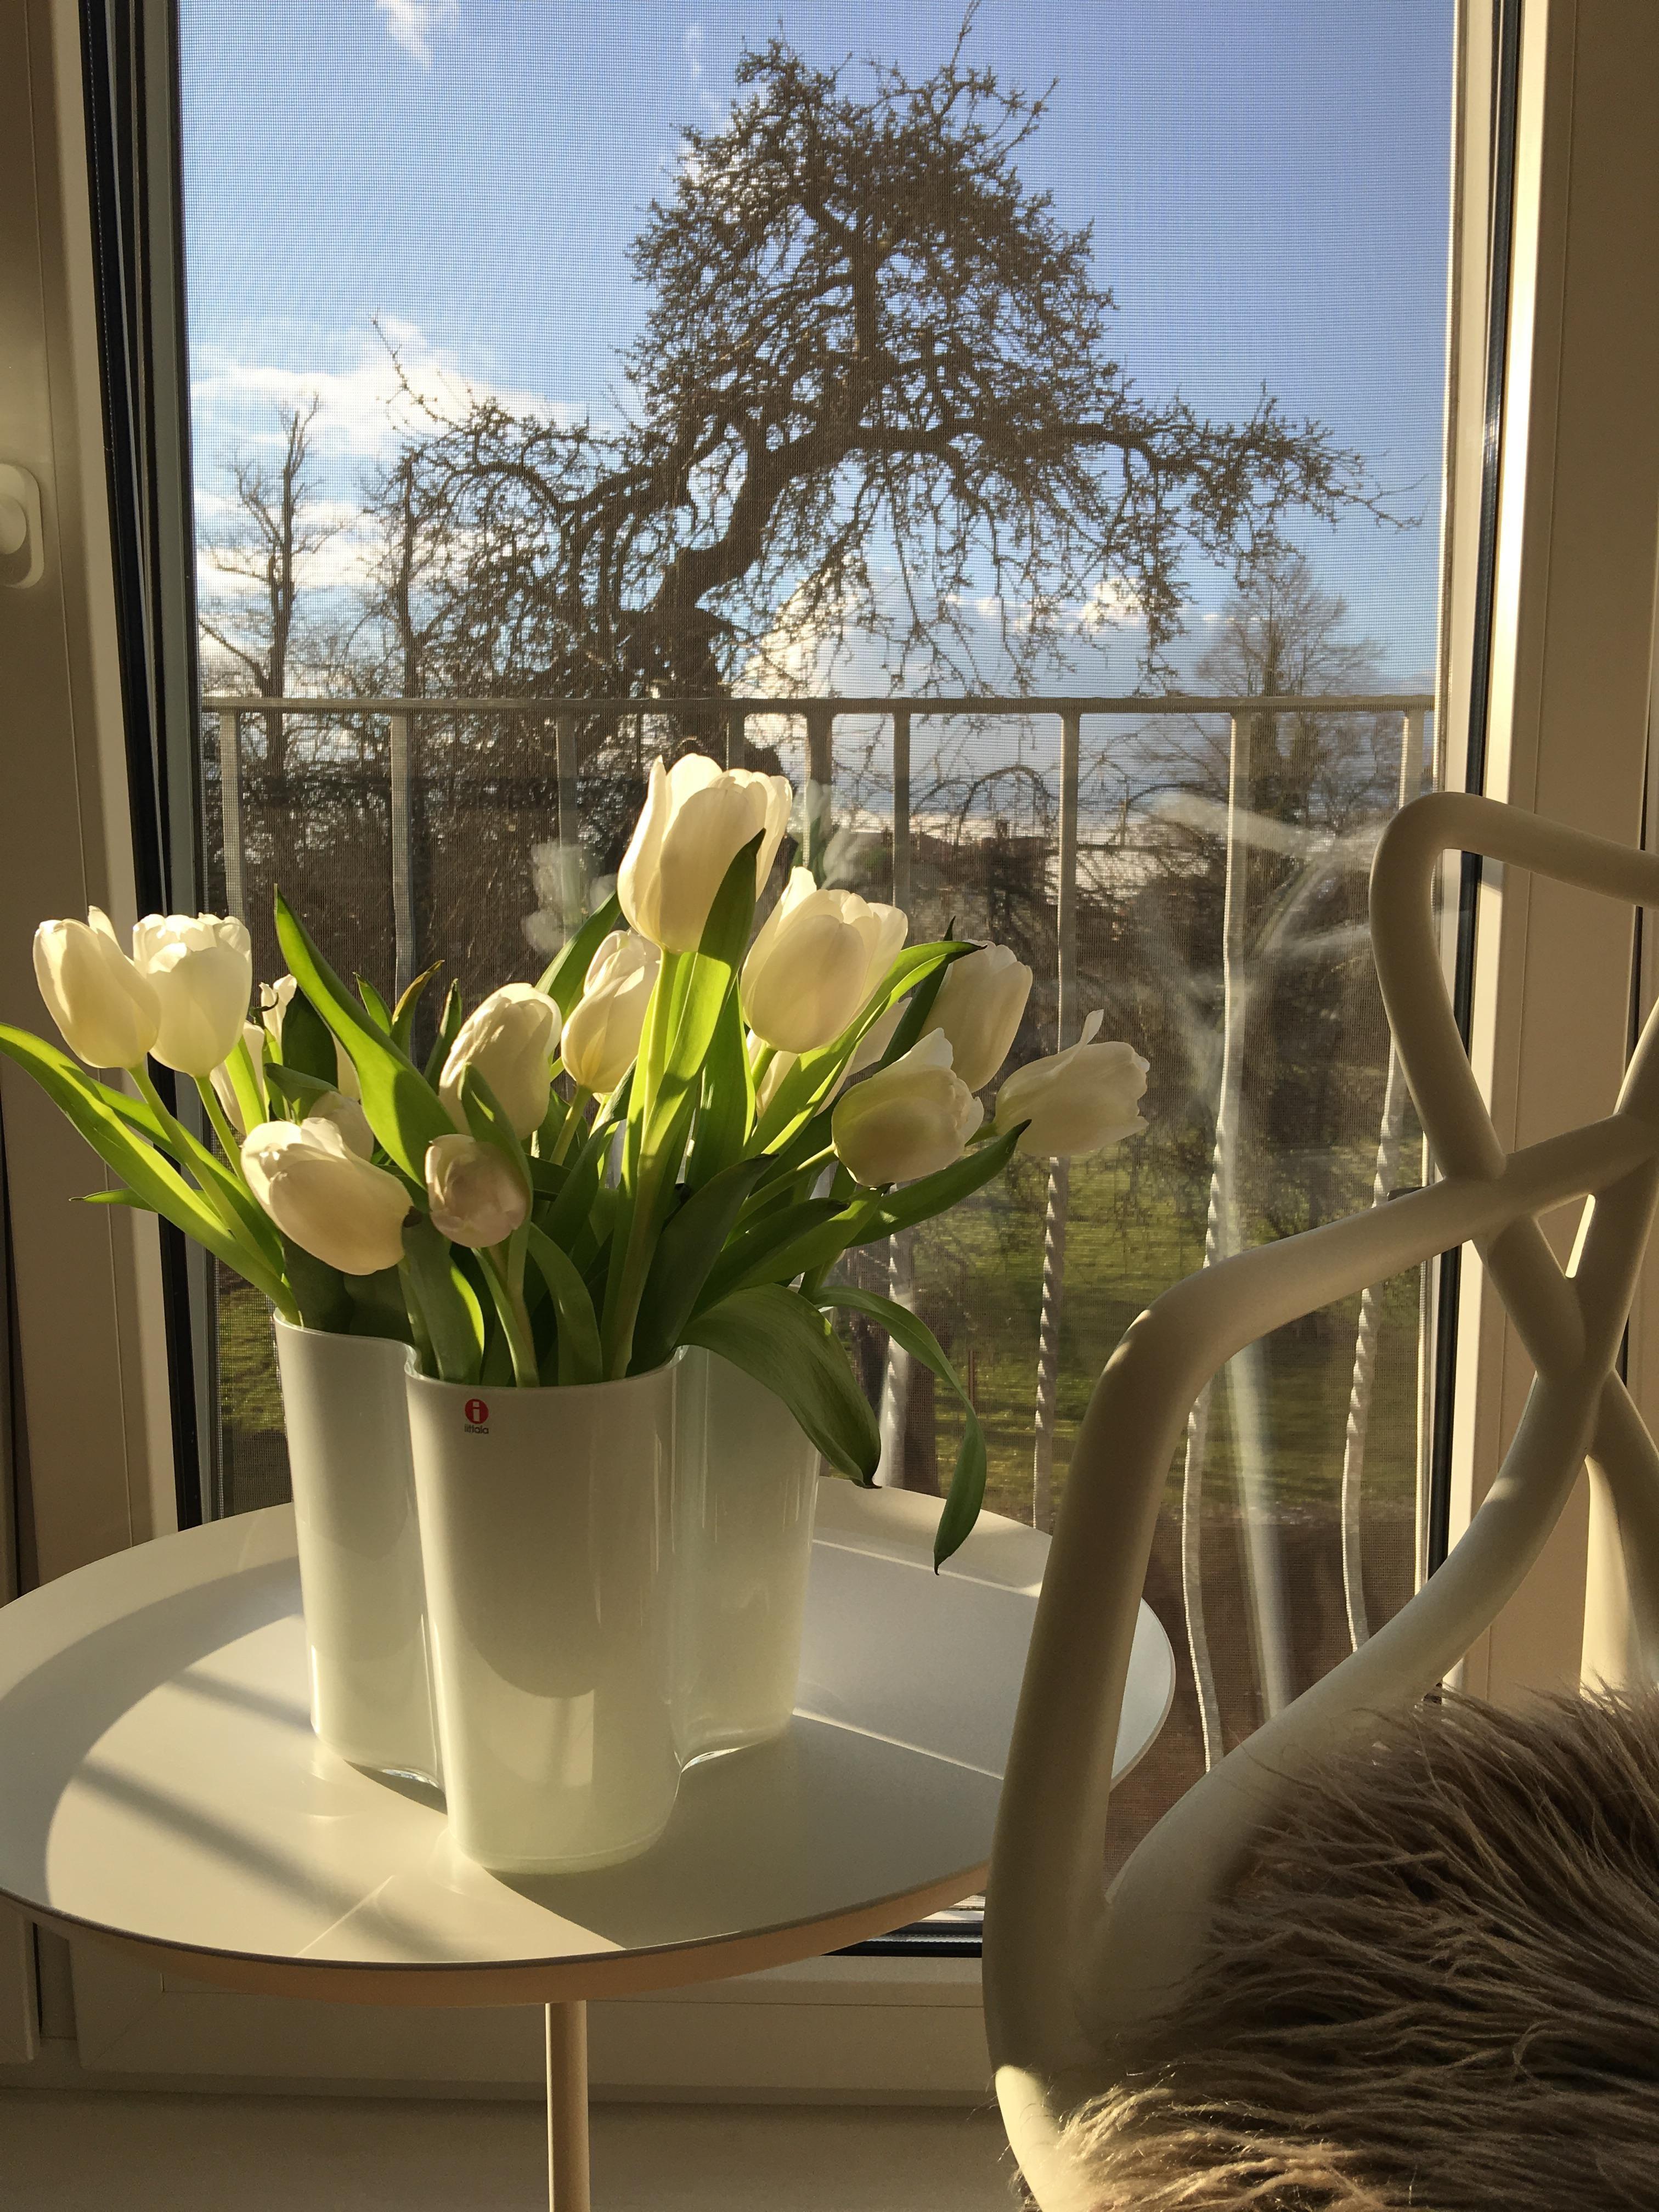 #fensterausblick#hay#tulpen#frühling#dekoration #kartell #homesweethome #frühlingssonne